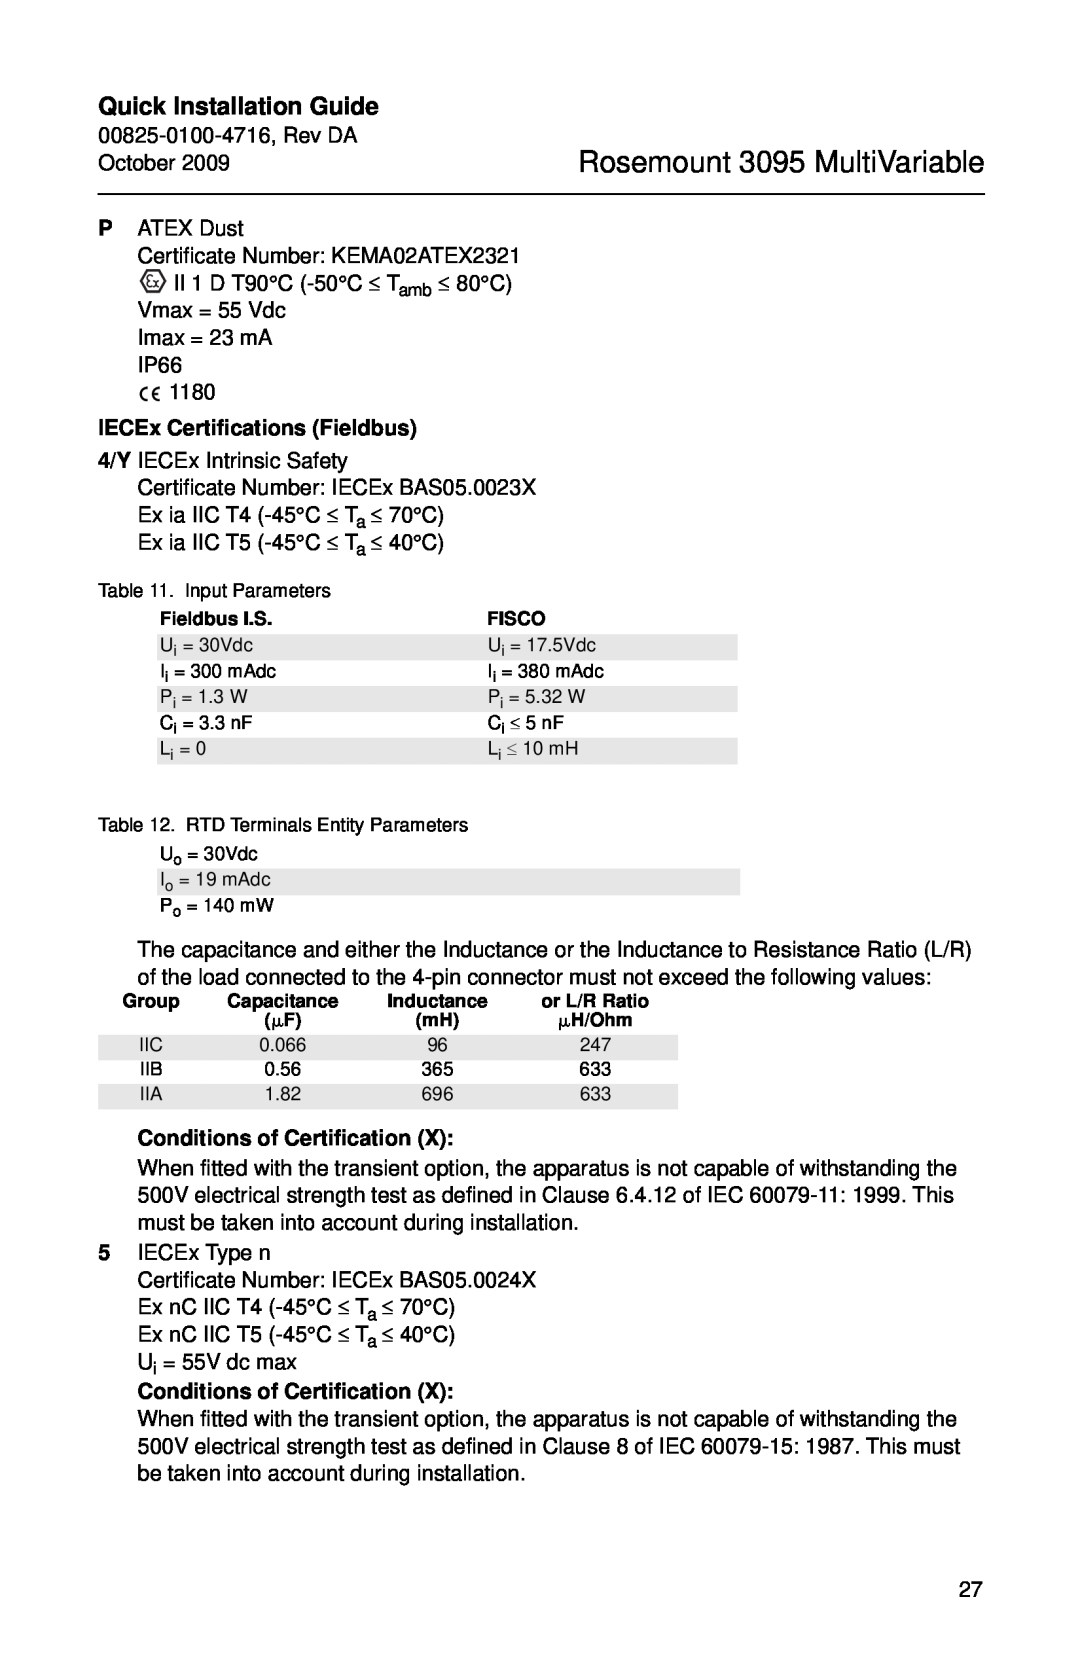 Emerson 00825-0100-4716 manual IECEx Certifications Fieldbus, Rosemount 3095 MultiVariable, Quick Installation Guide 